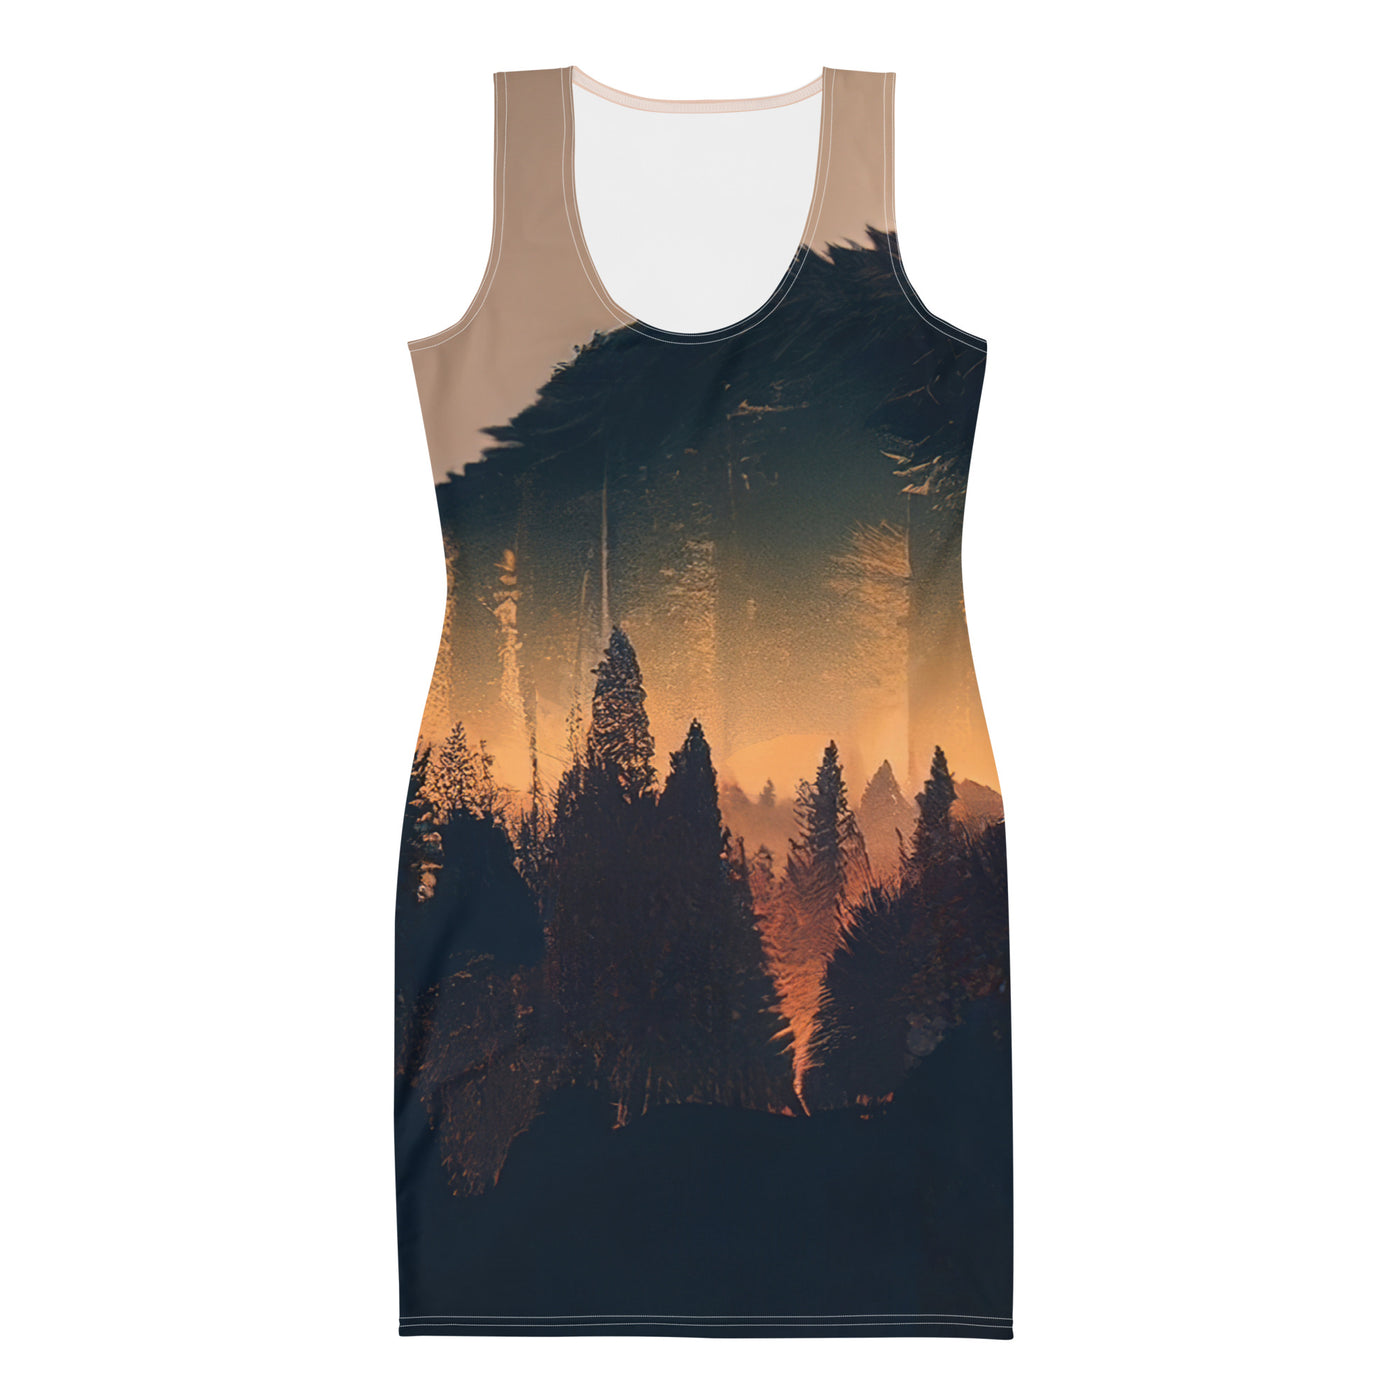 Bär und Bäume Illustration - Langes Damen Kleid (All-Over Print) camping xxx